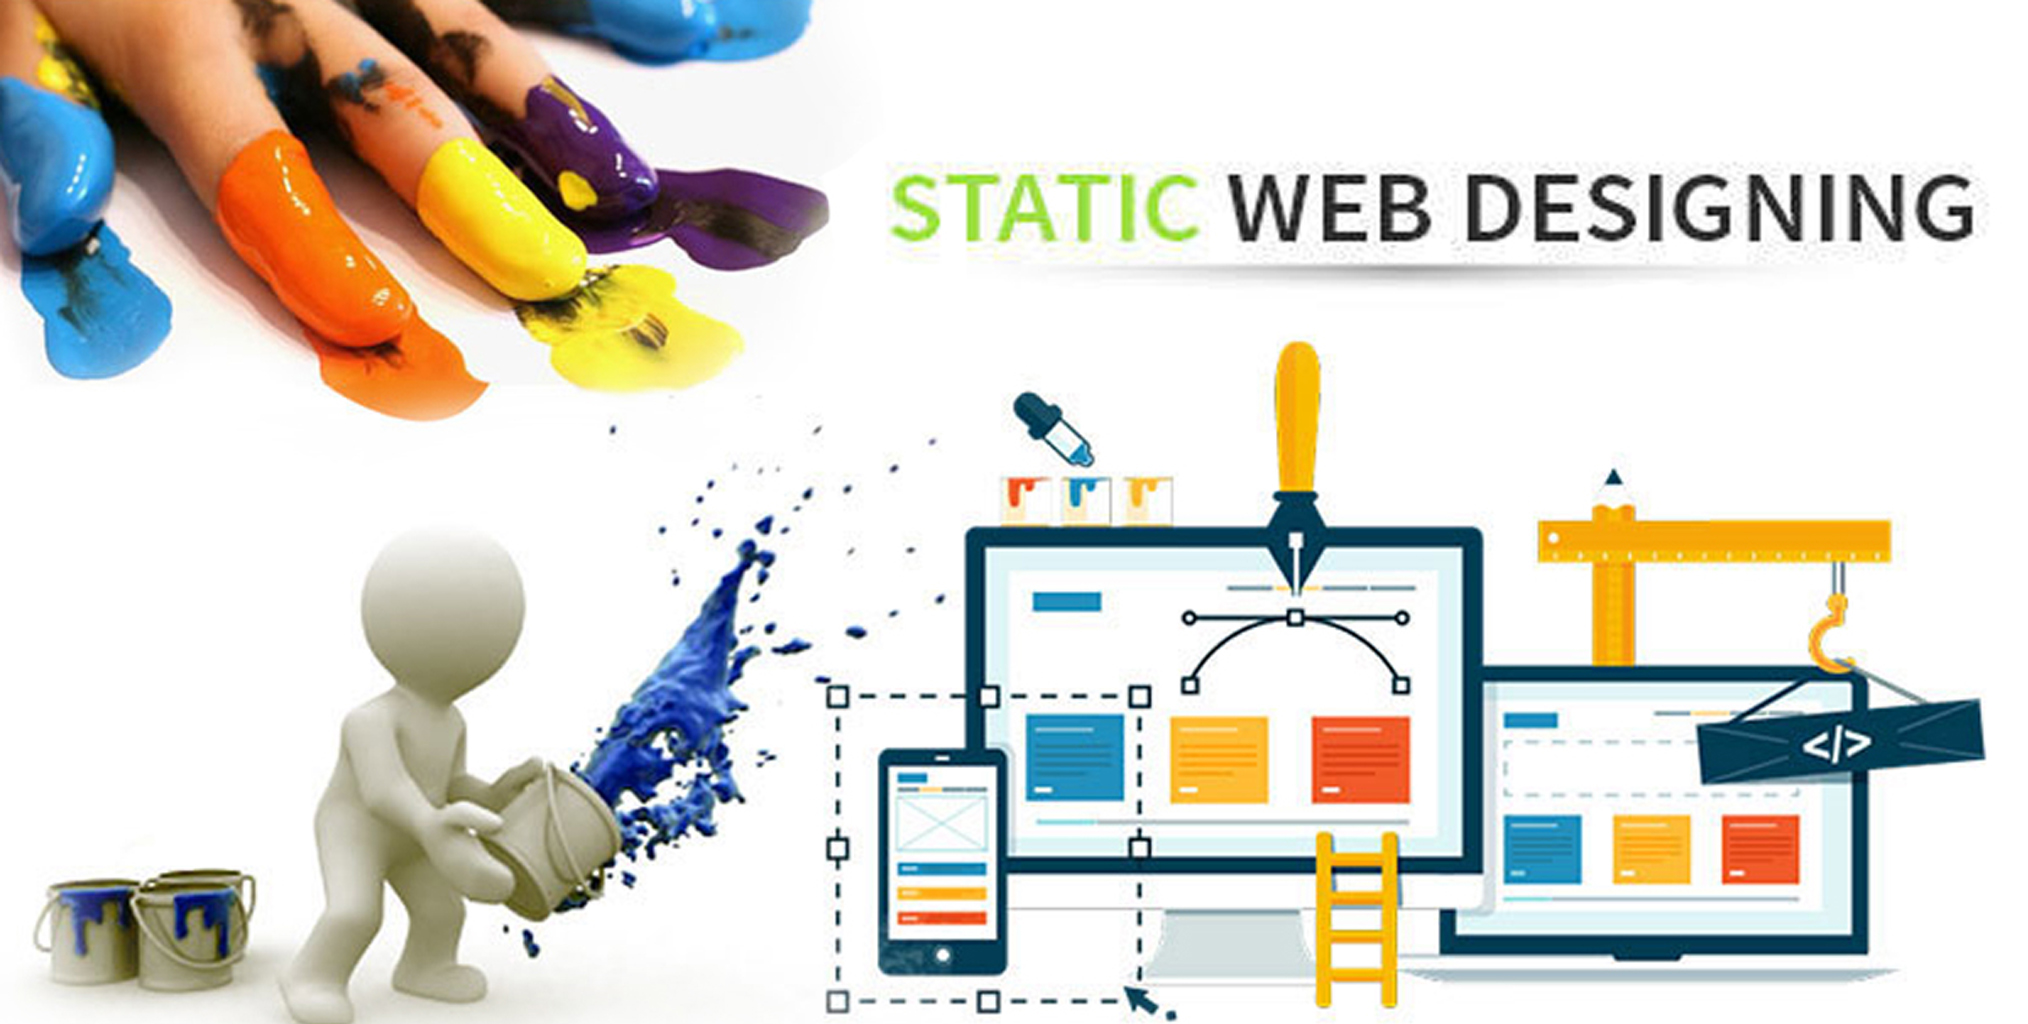 Static Website